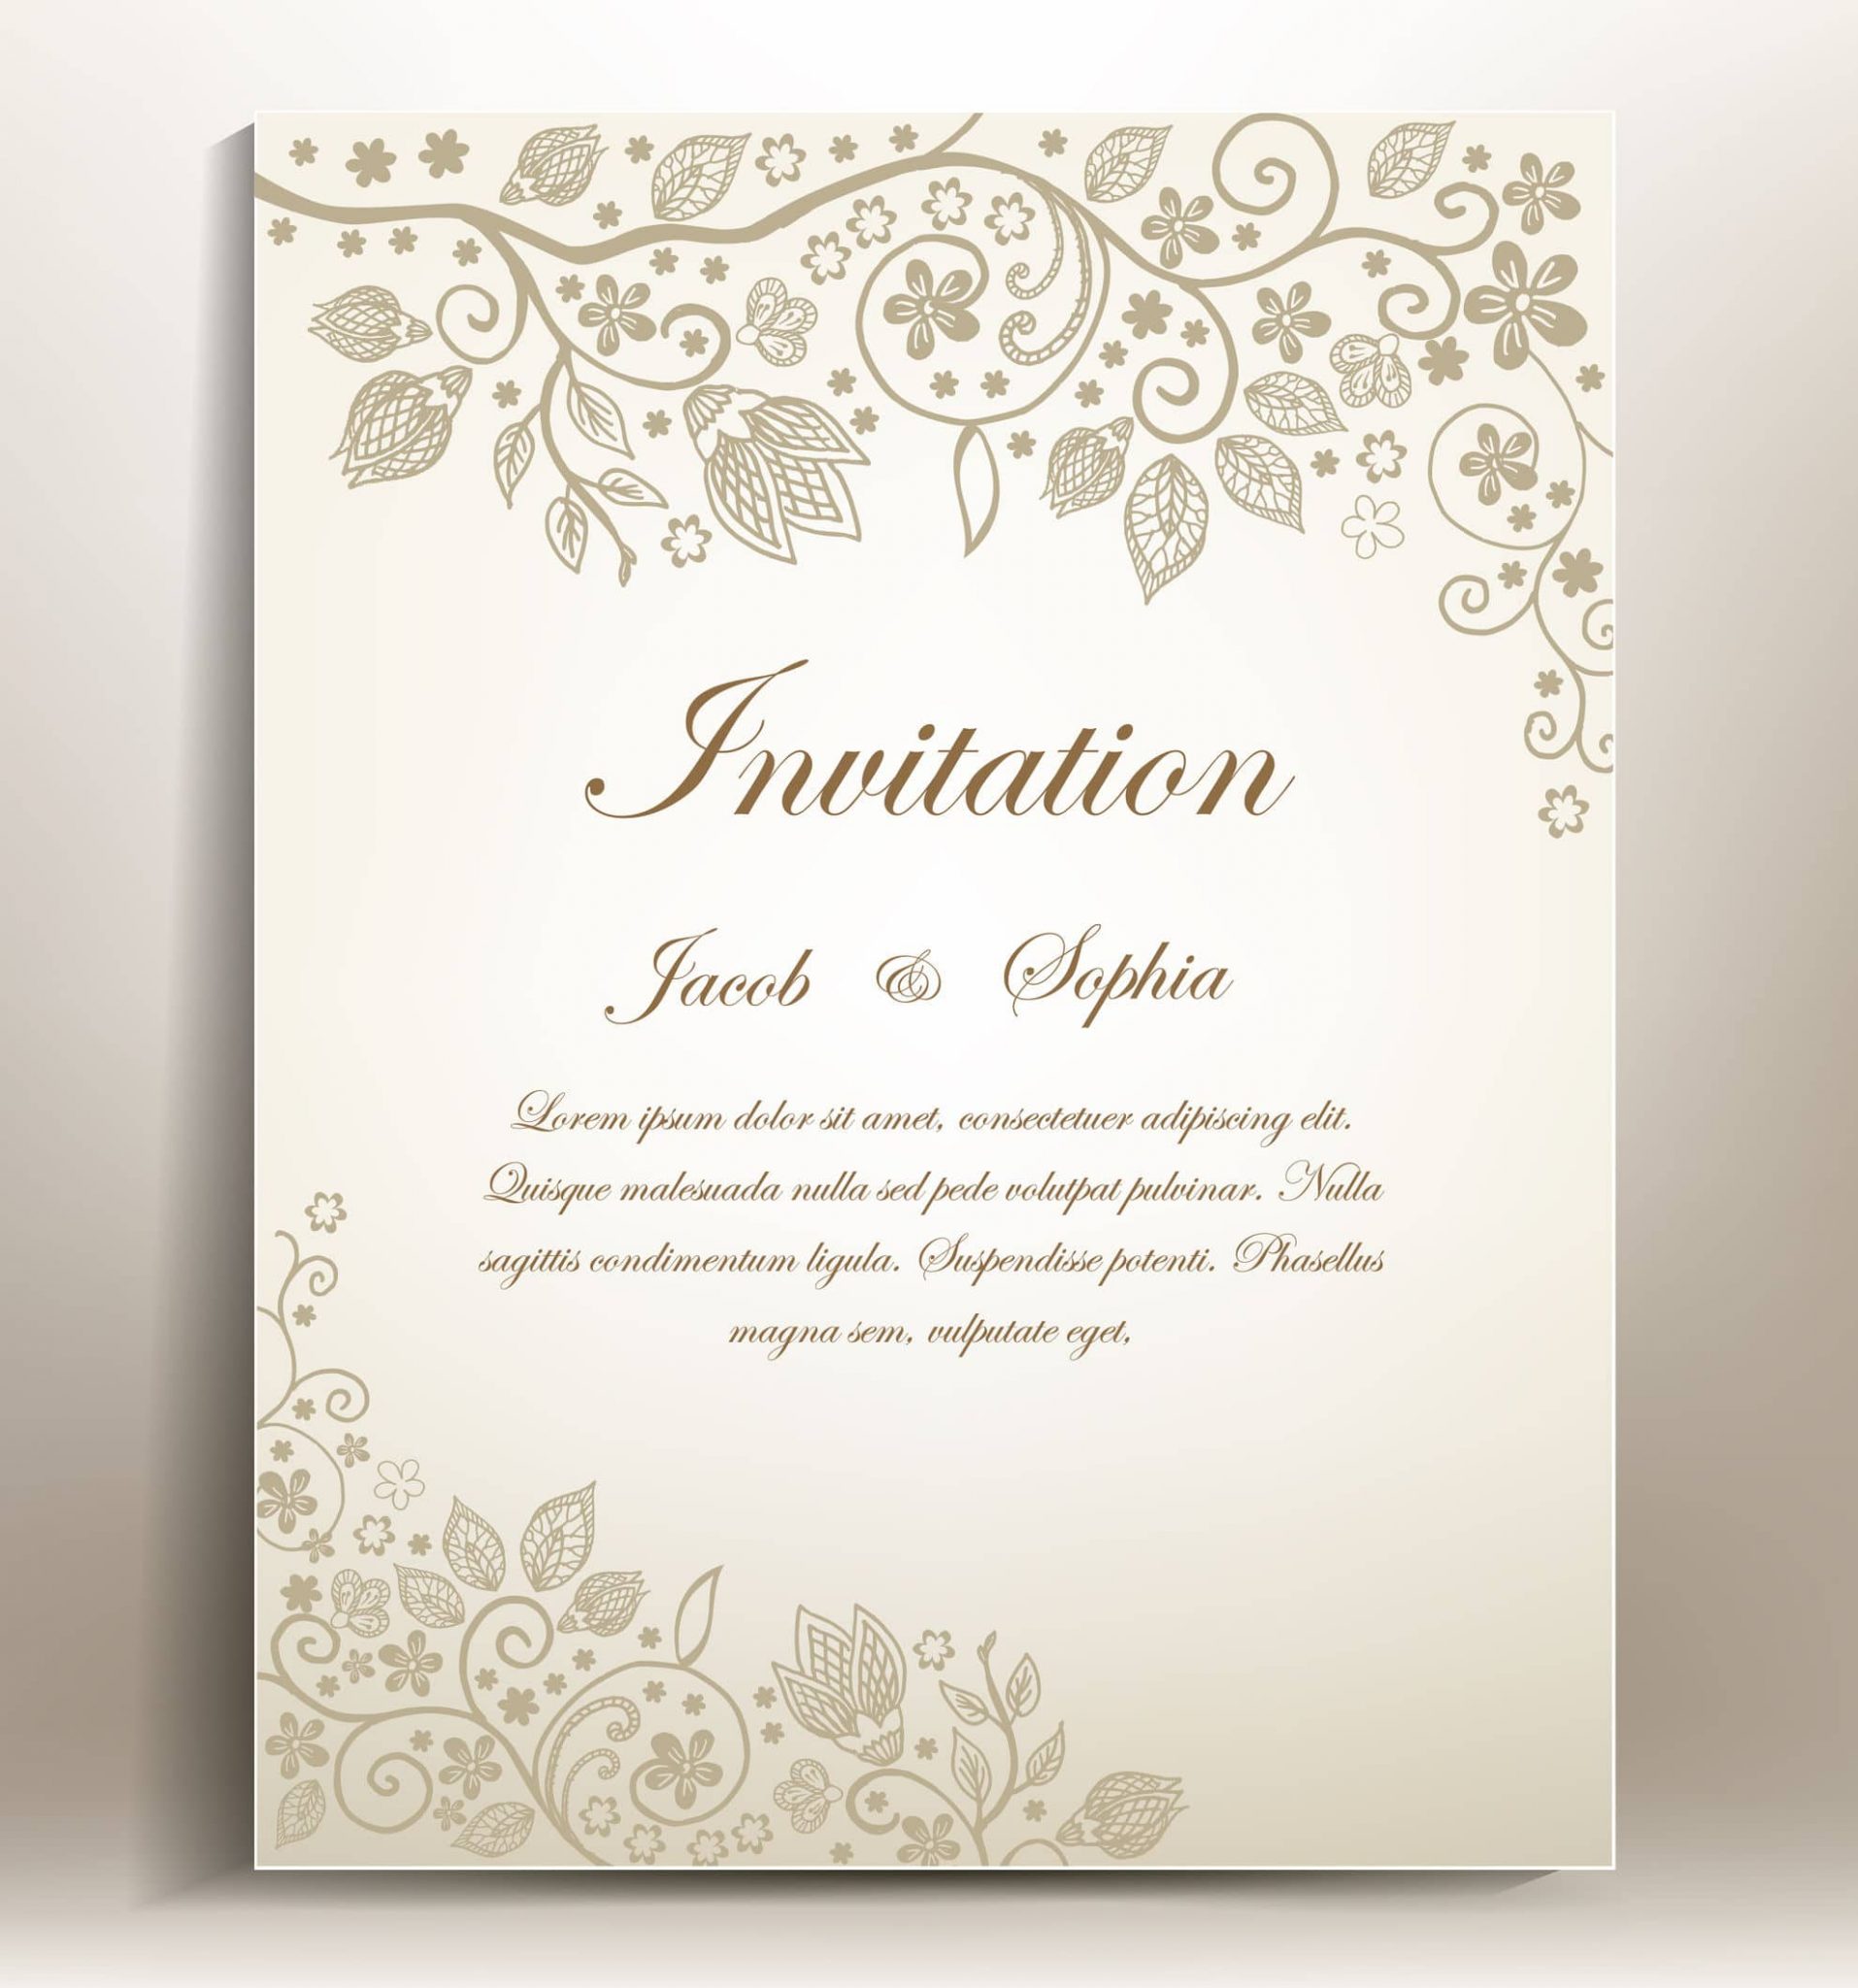 Invitation au mariage